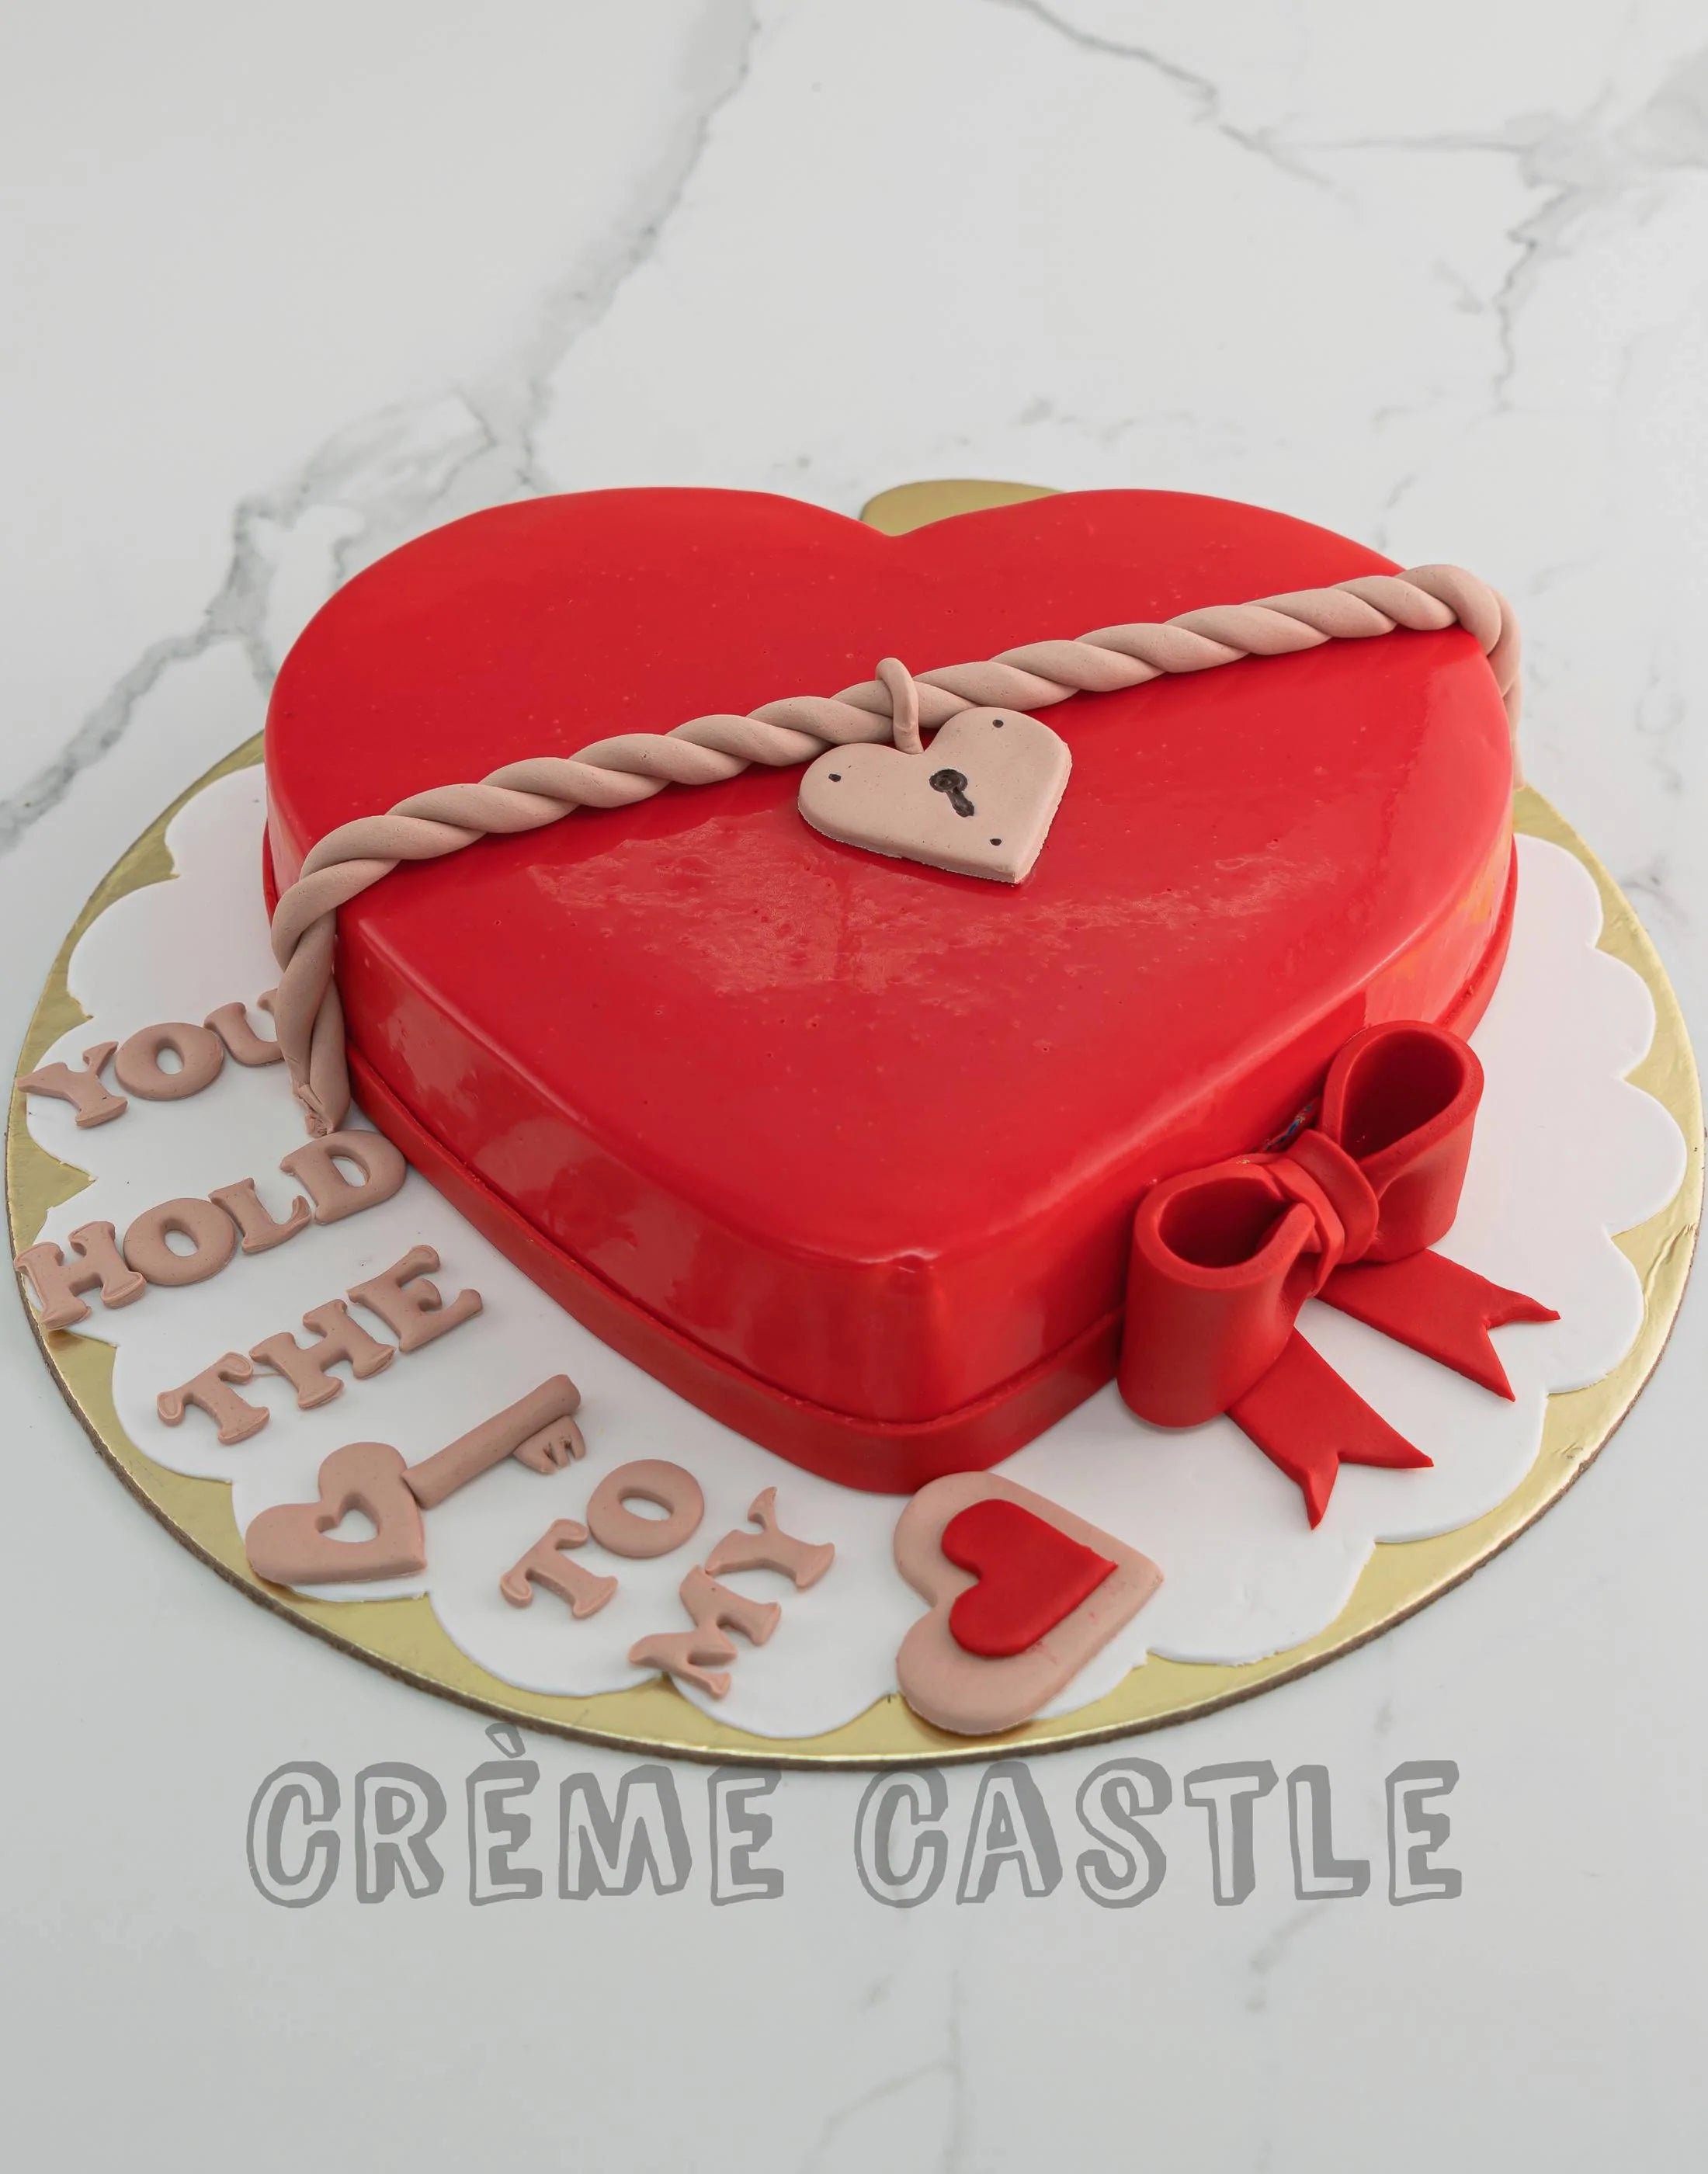 Ideas For 50th Wedding Anniversary Cakes - Celebration Joy